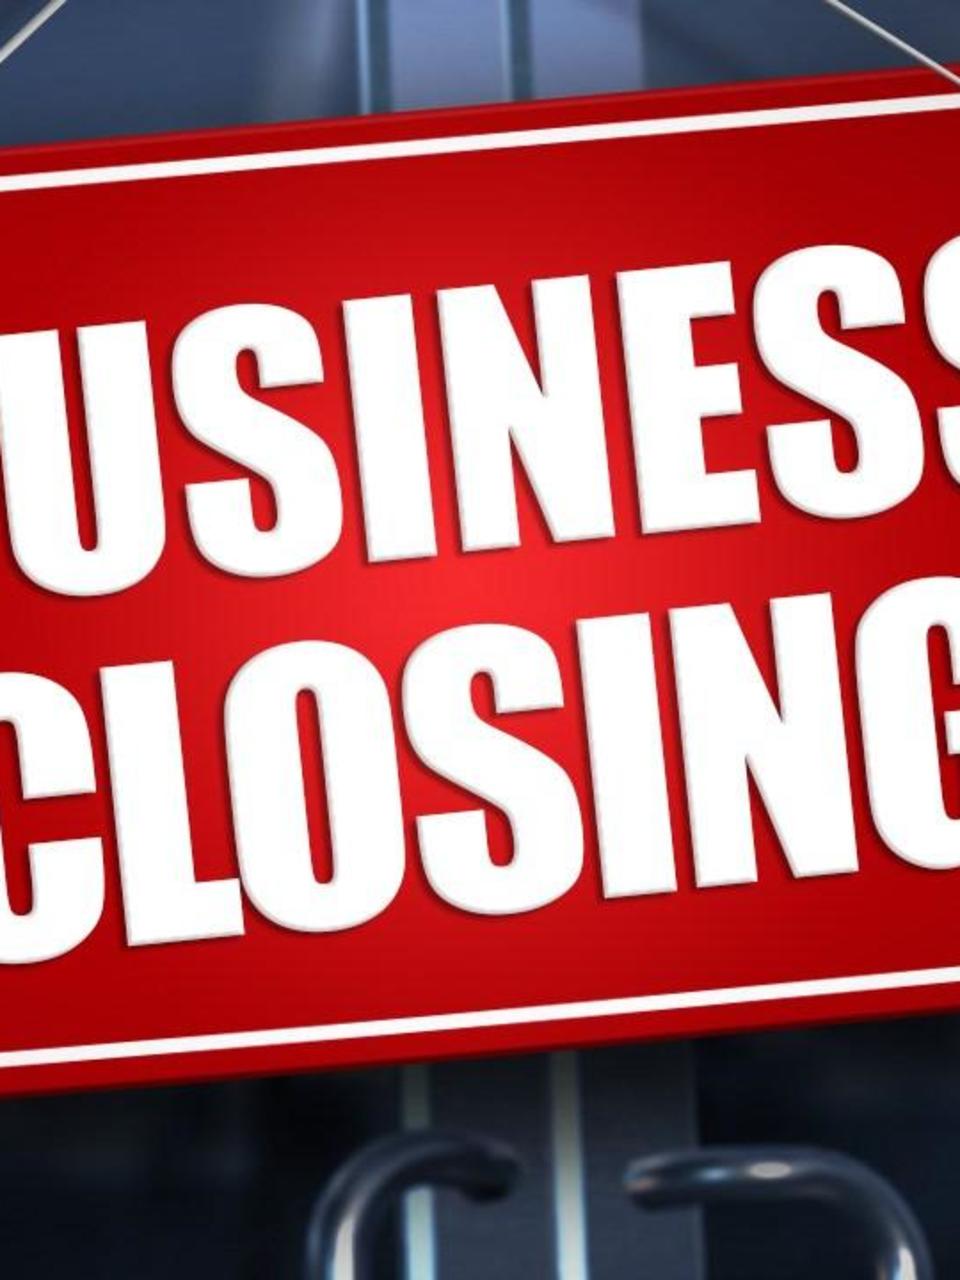 Ohio Furniture Store Chain Will Close Its Doors Wkrc